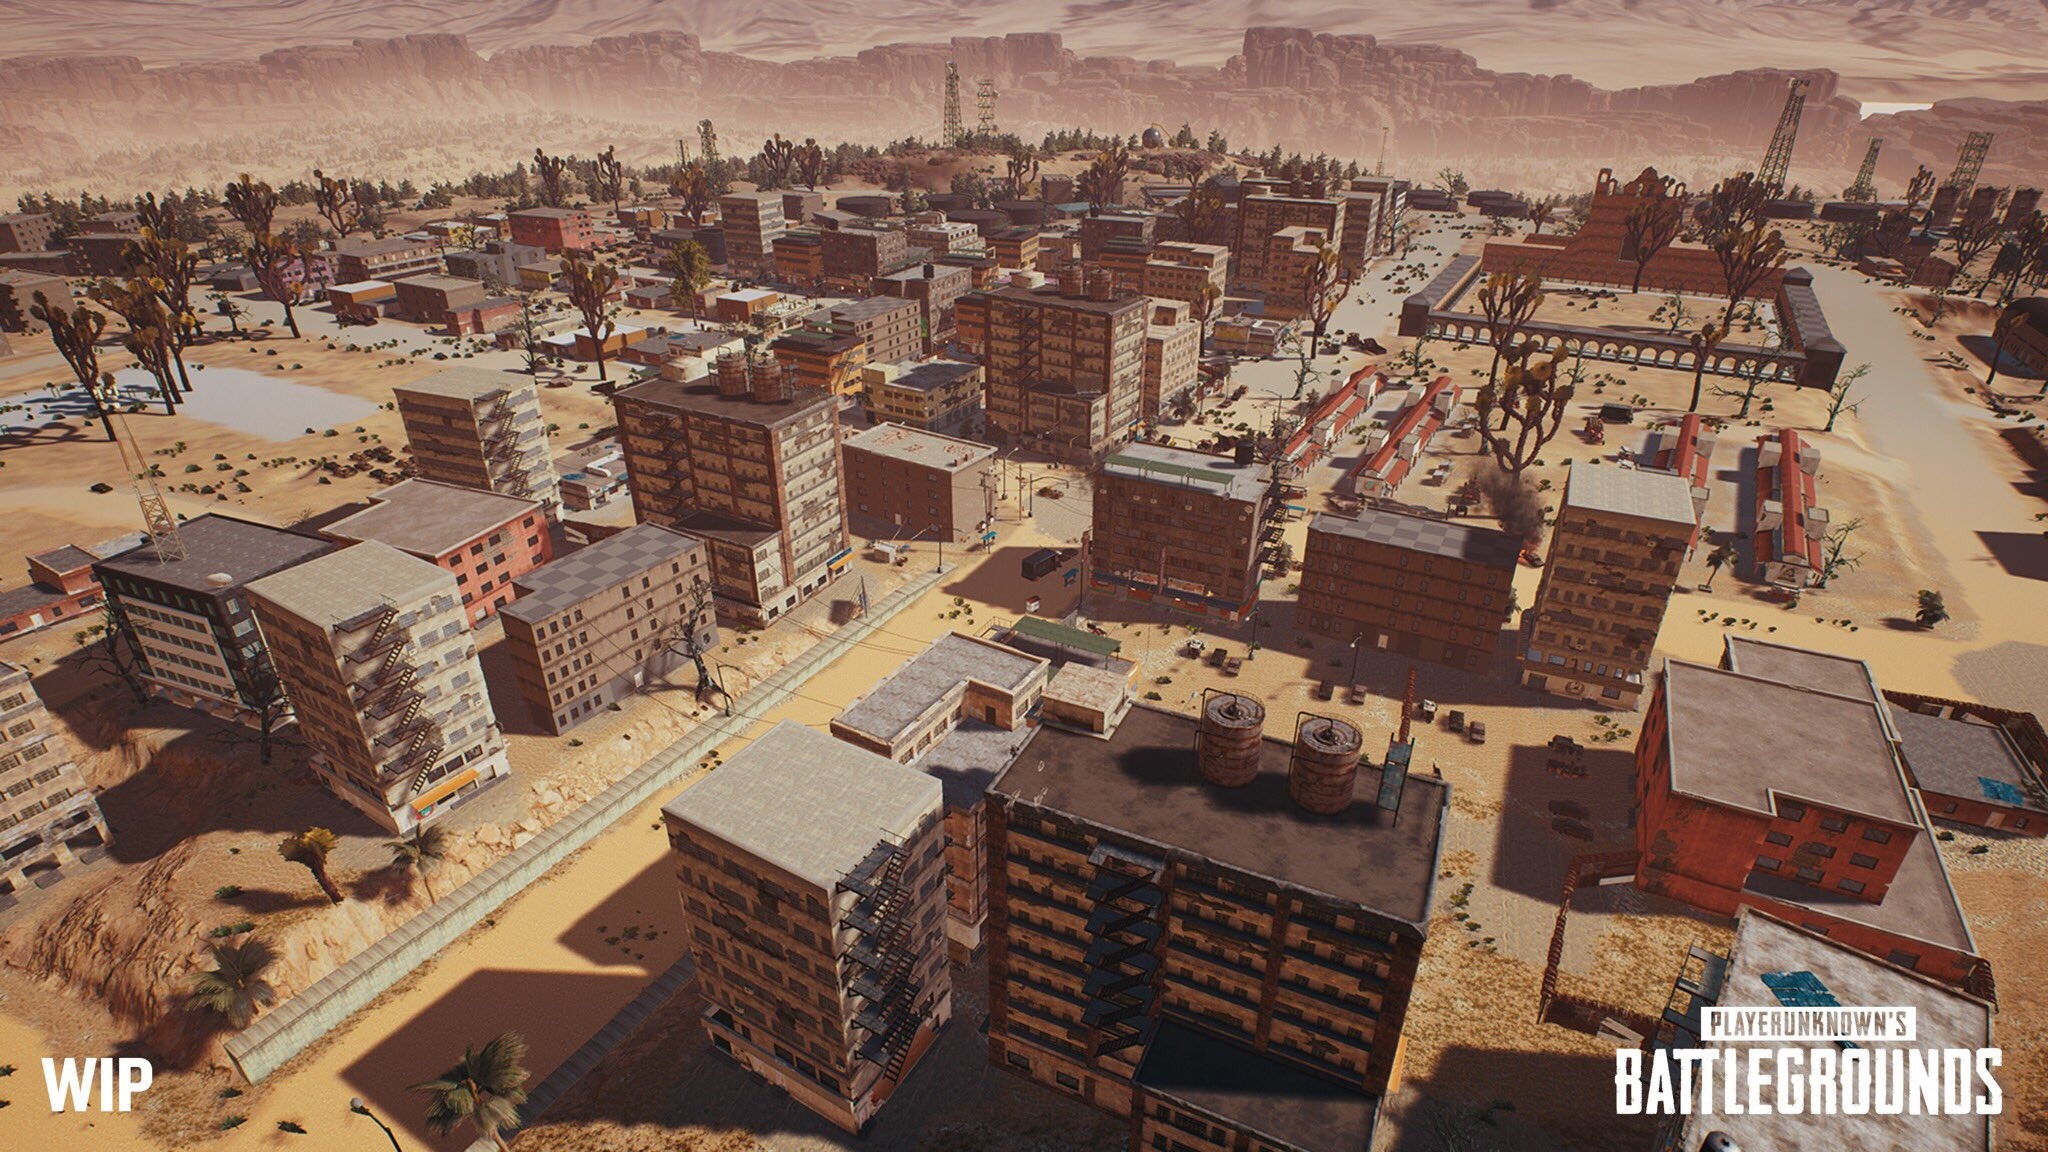 Gc 17 Pubg 砂漠マップの新イメージ ビルが立ち並ぶ都市部を披露 Game Spark 国内 海外ゲーム情報サイト